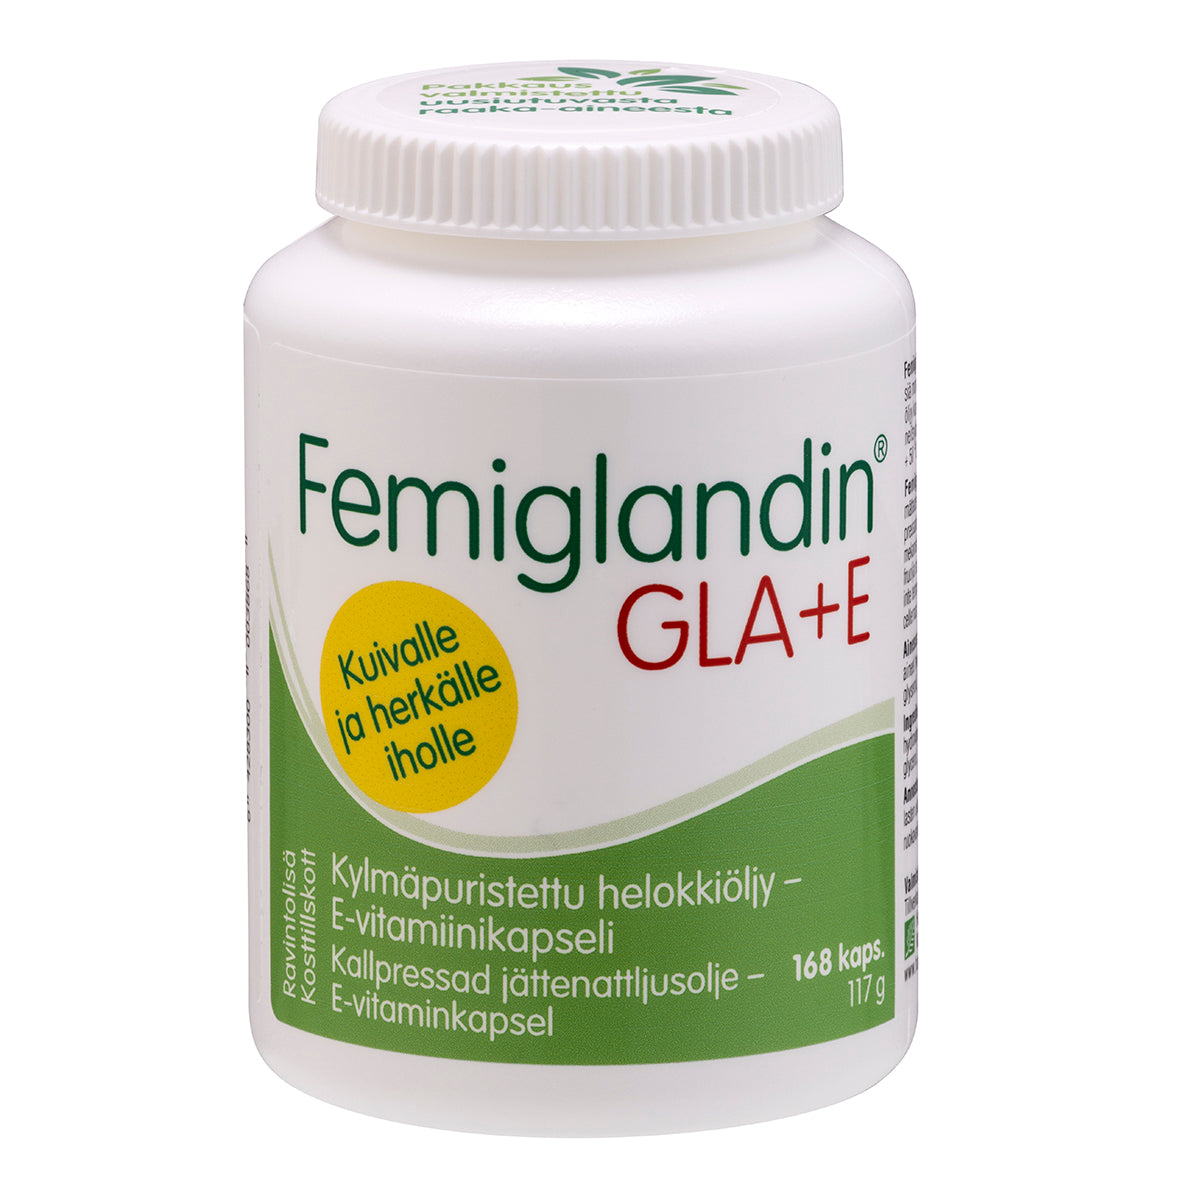 Femiglandin GLA+E - Helokkiöljy-E-vitamiinikapseli 168 kaps.